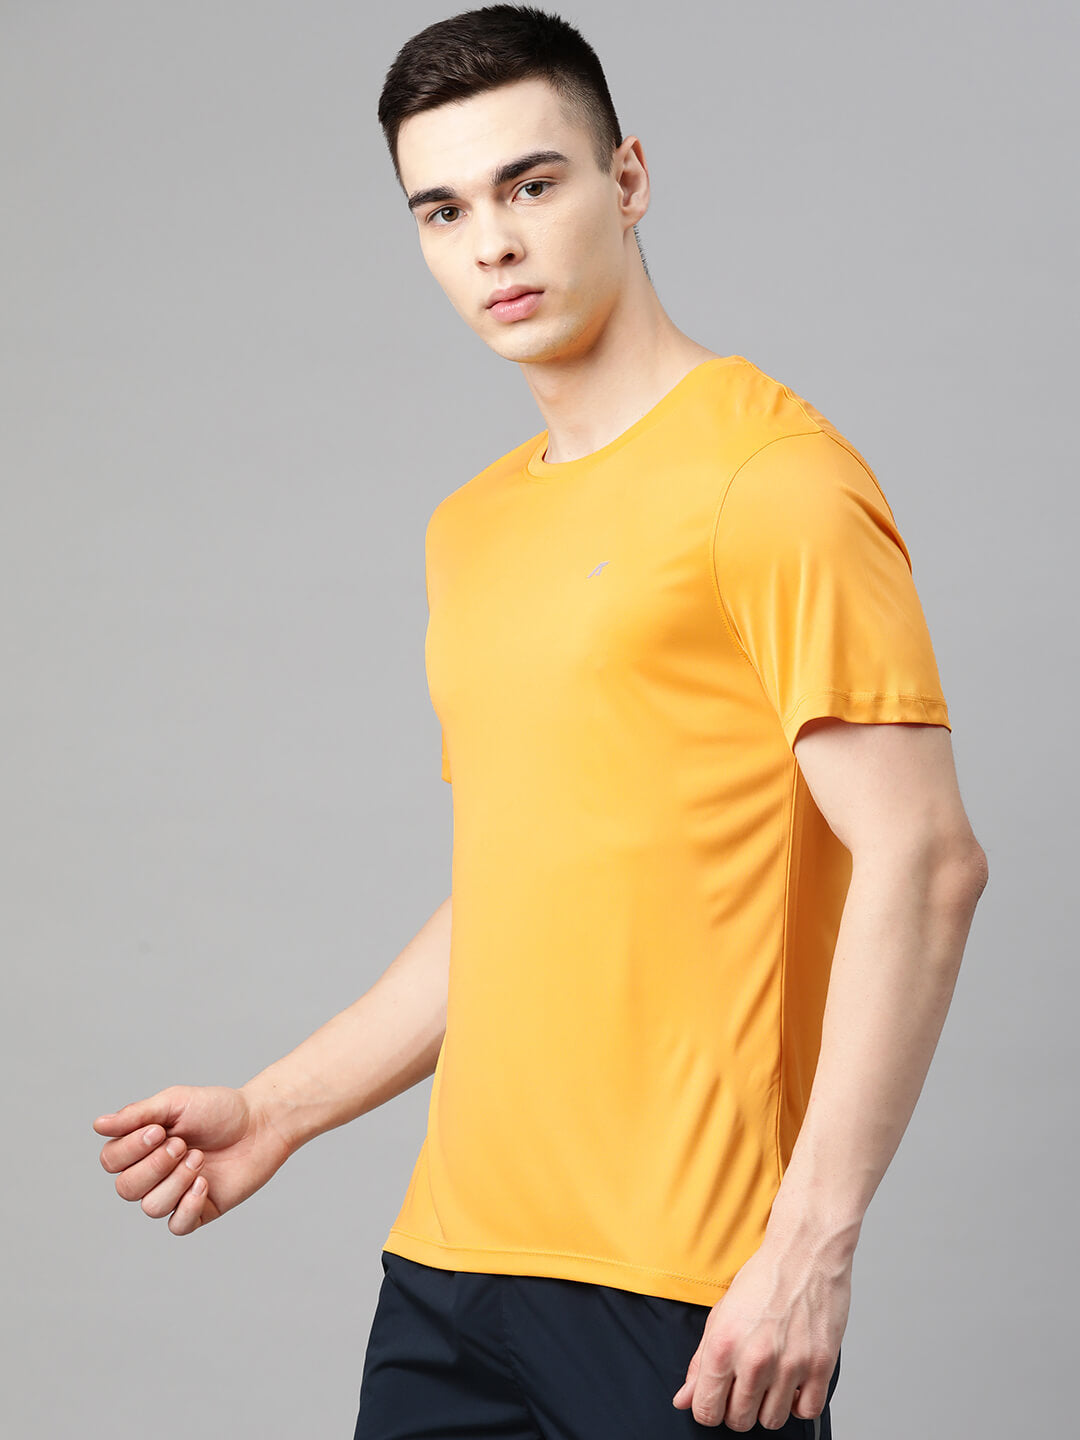 Alcis Men Anti Static Reflective Slim Fit Sports T-shirt